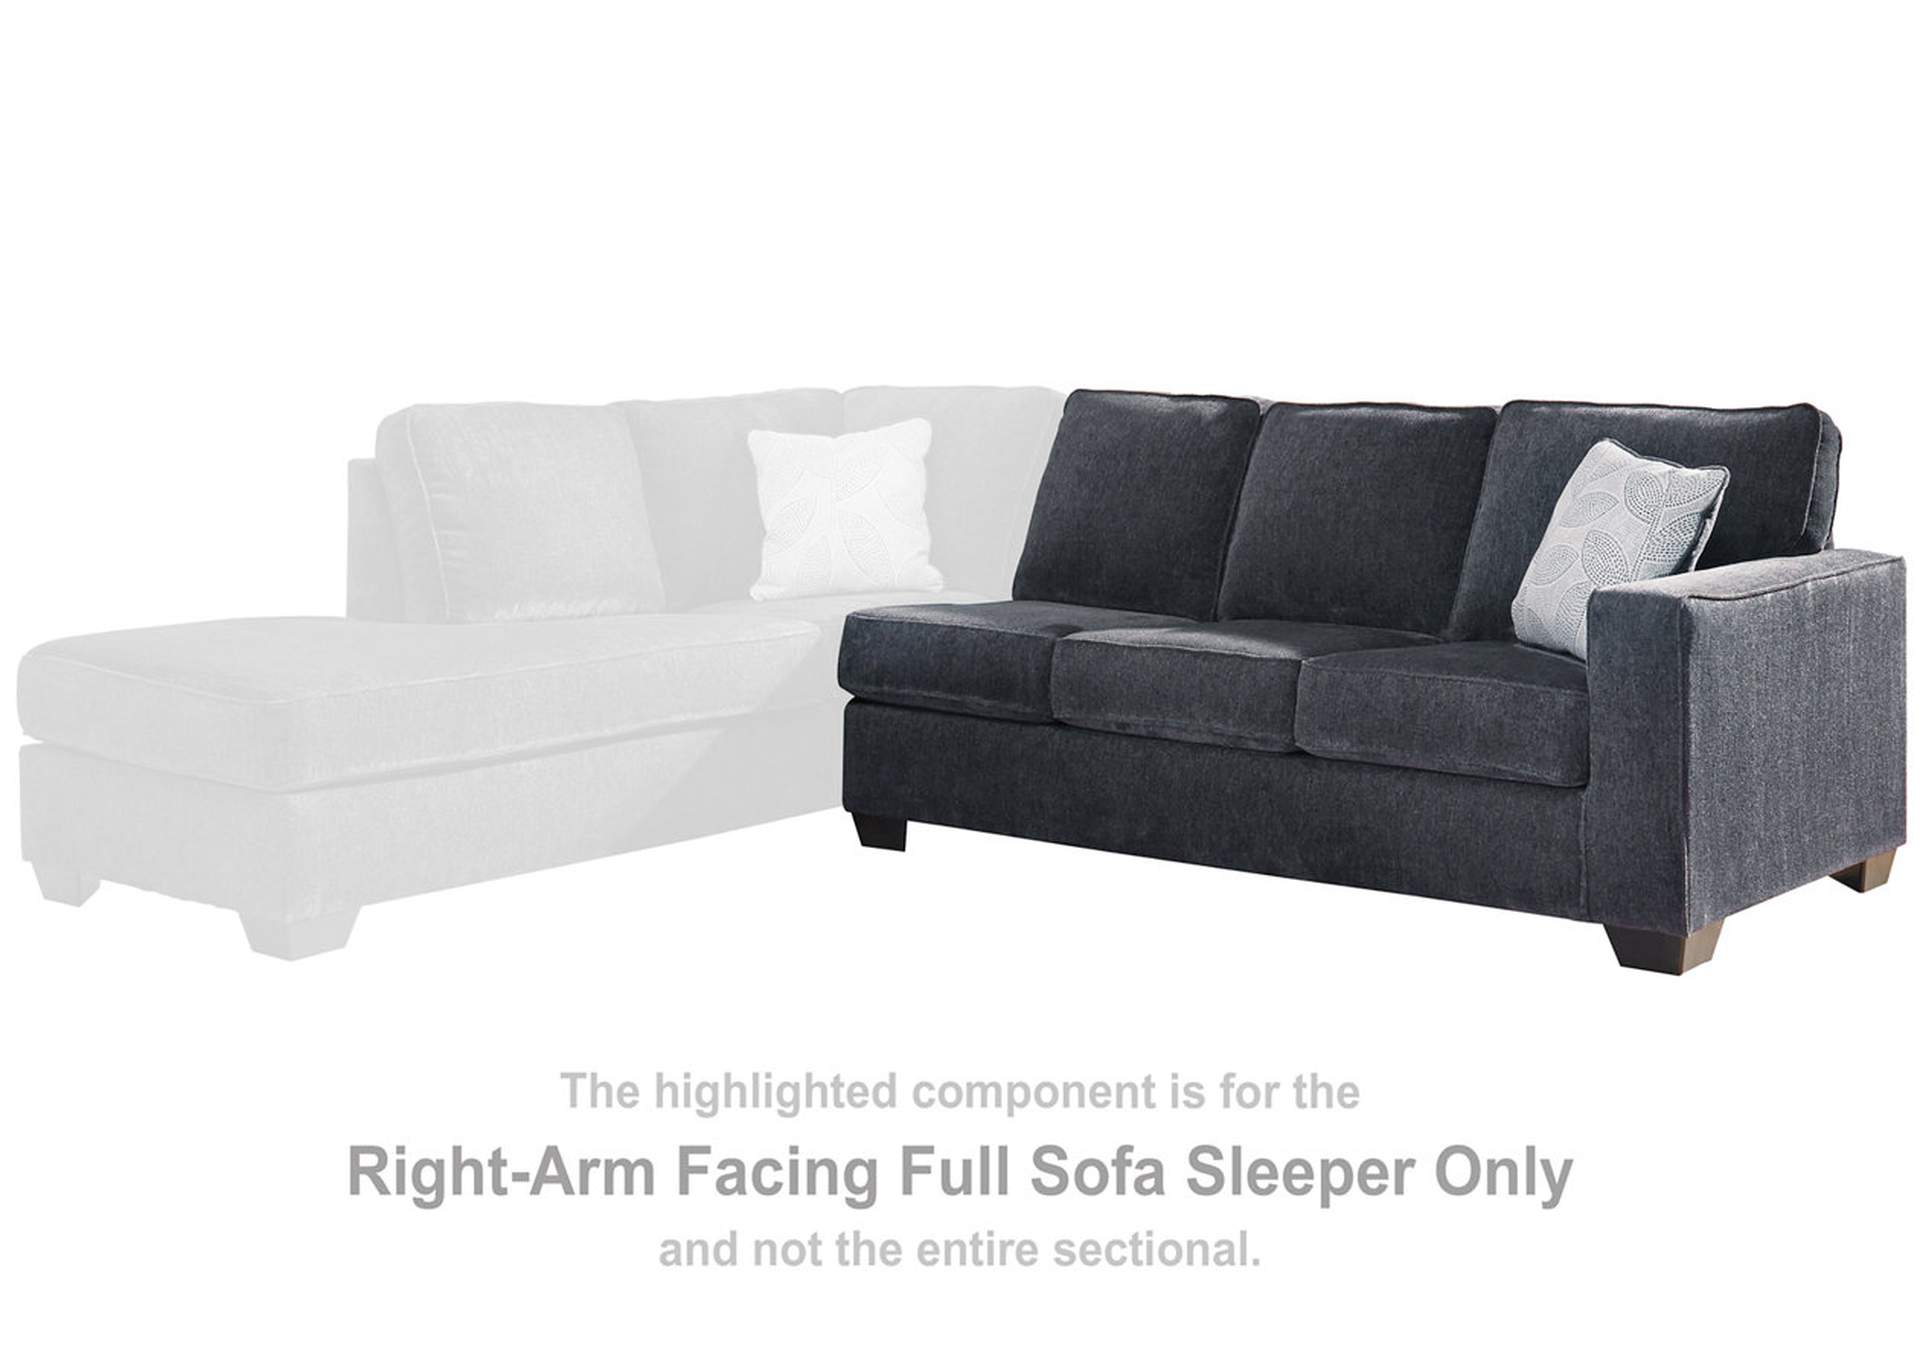 Altari Right-Arm Facing Full Sofa Sleeper,Signature Design By Ashley